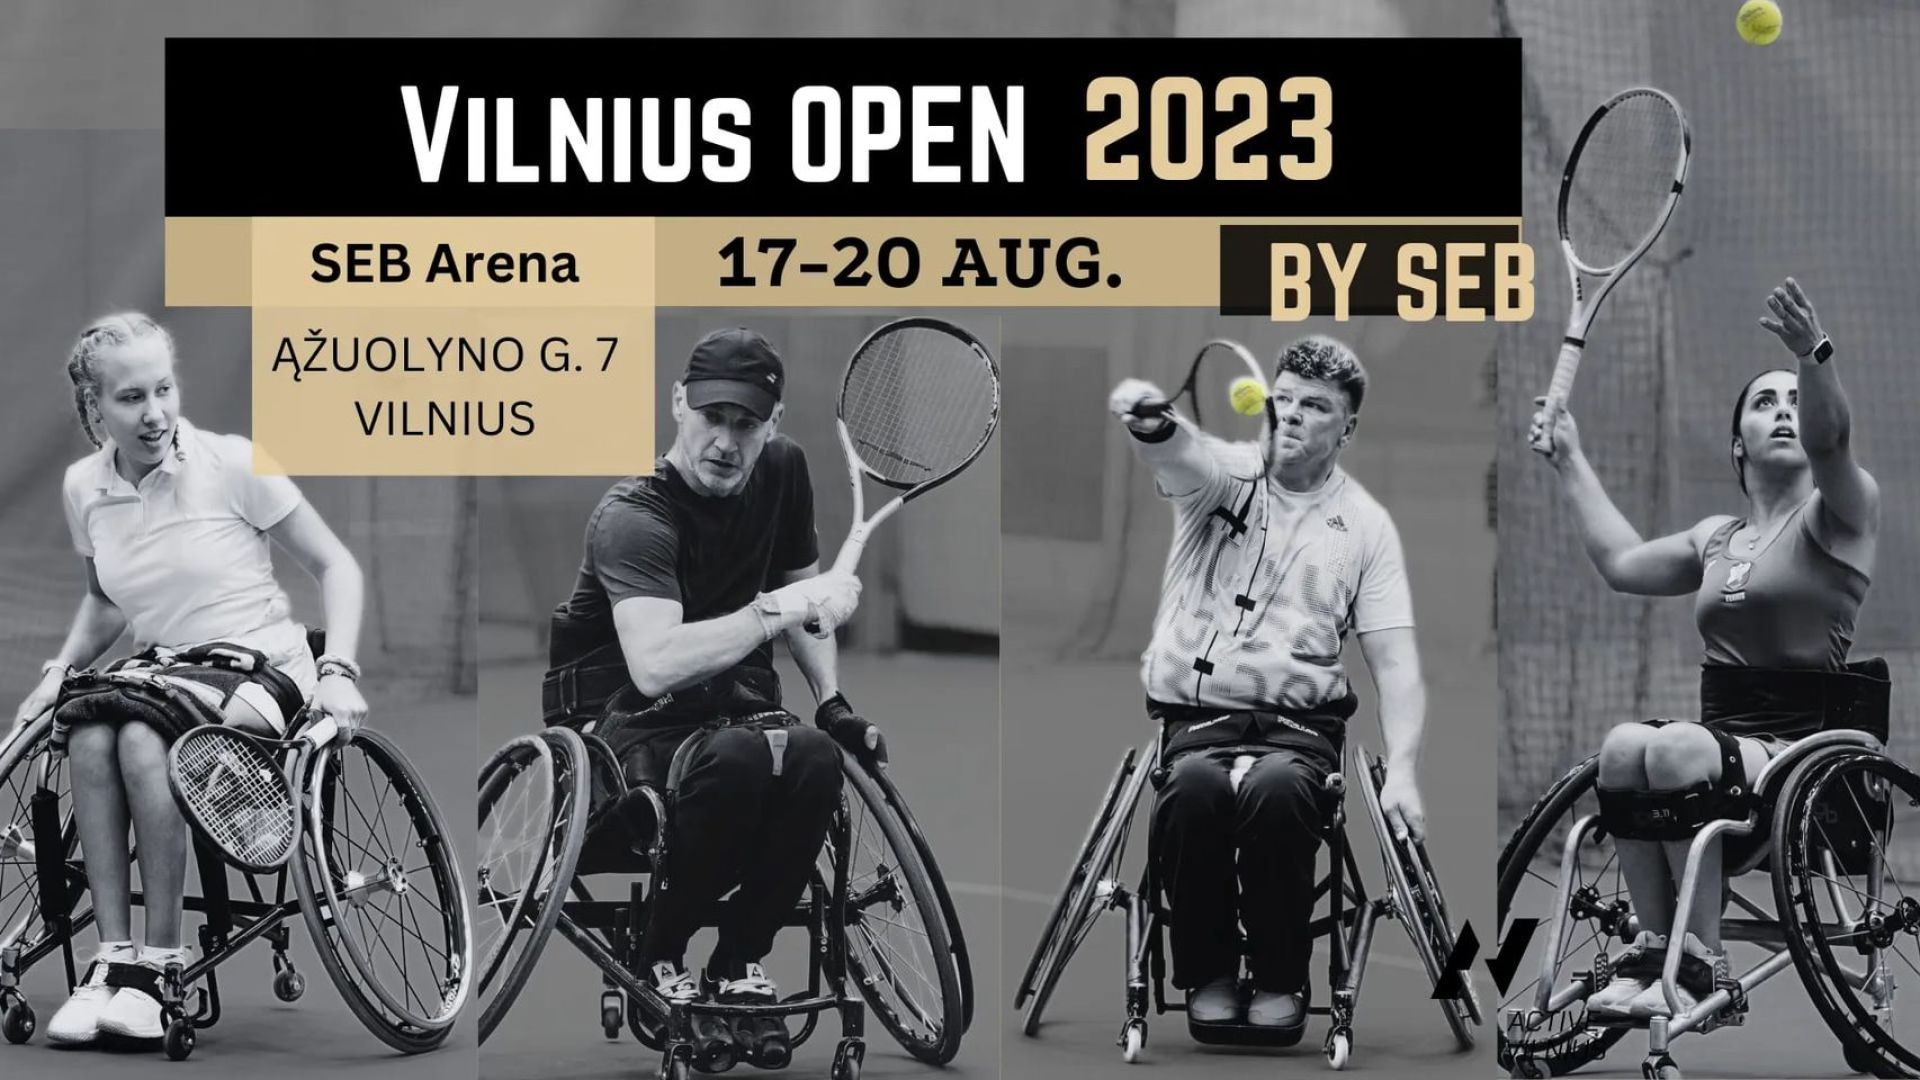 COURT 9 DAY 3 - VILNIIUS OPEN 2023 BY SEB